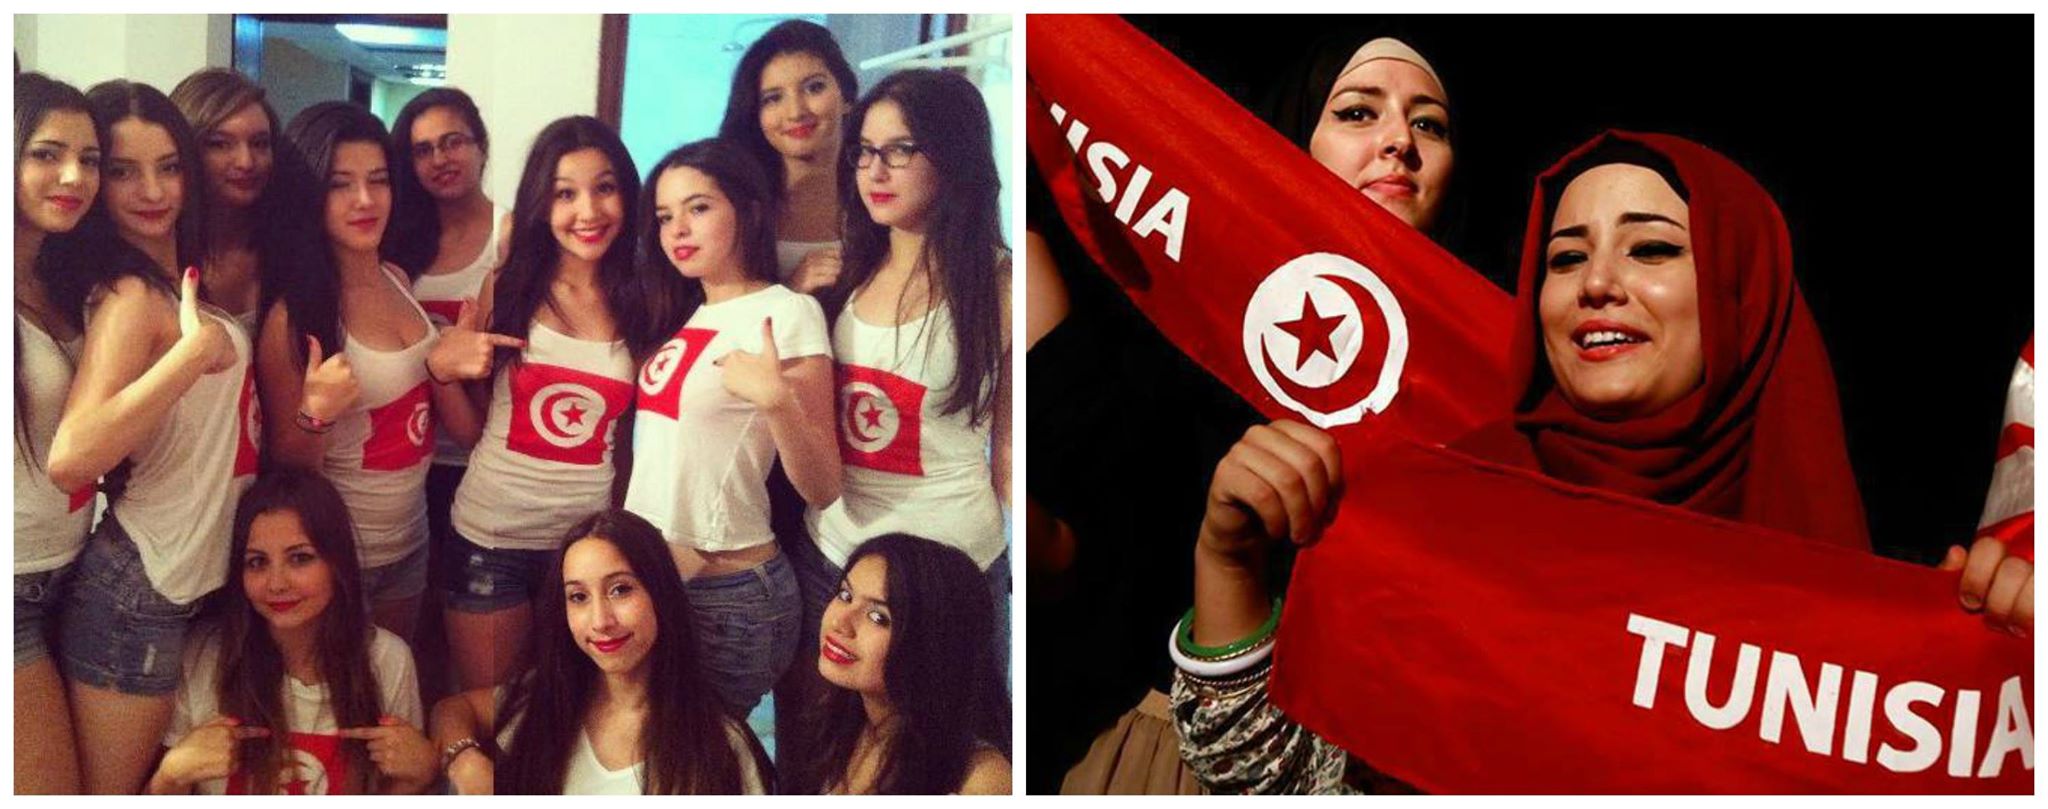 Single frauen tunesien